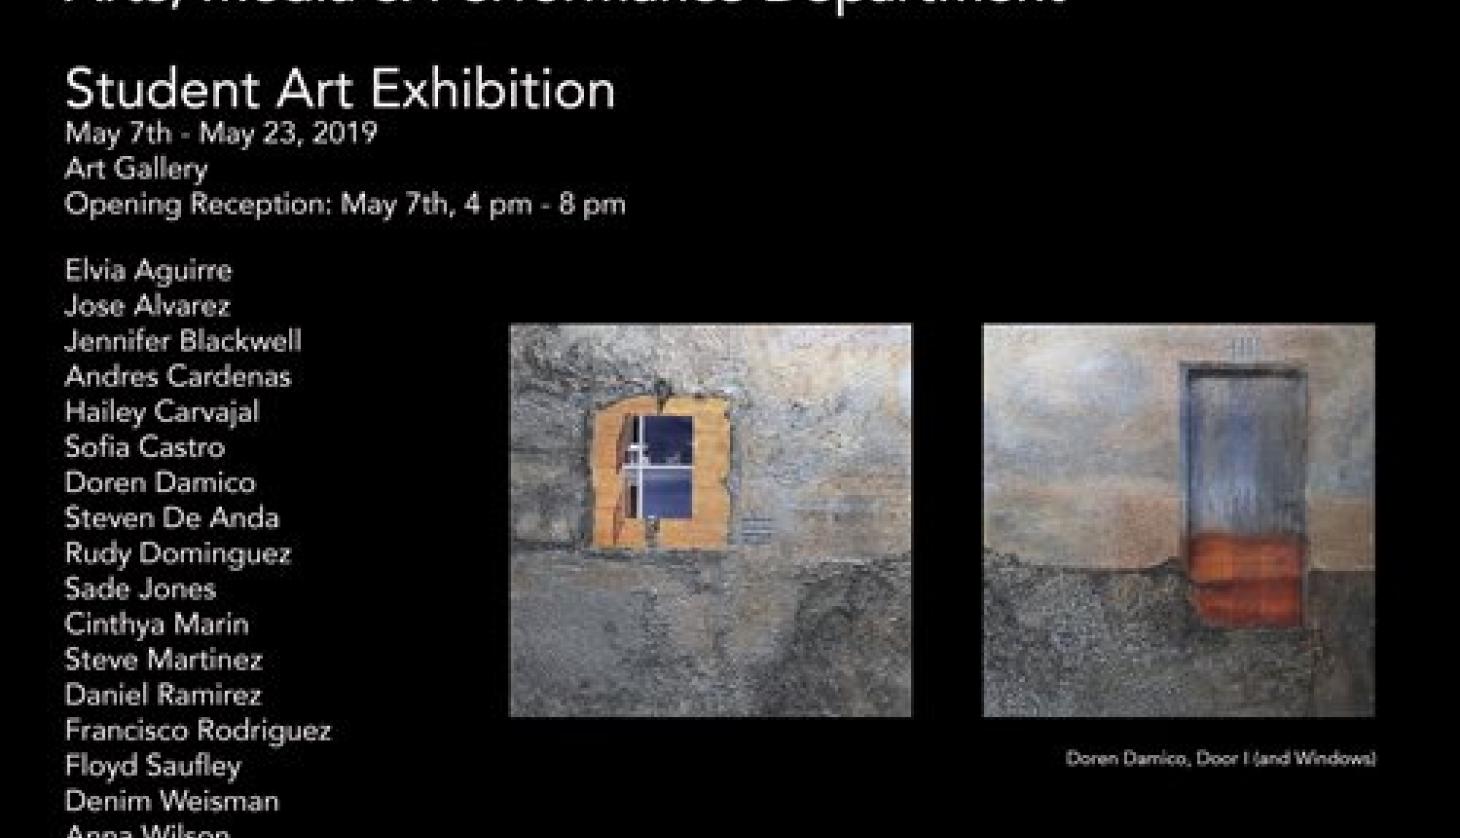 Student Art Exhibition Flyer Event Info